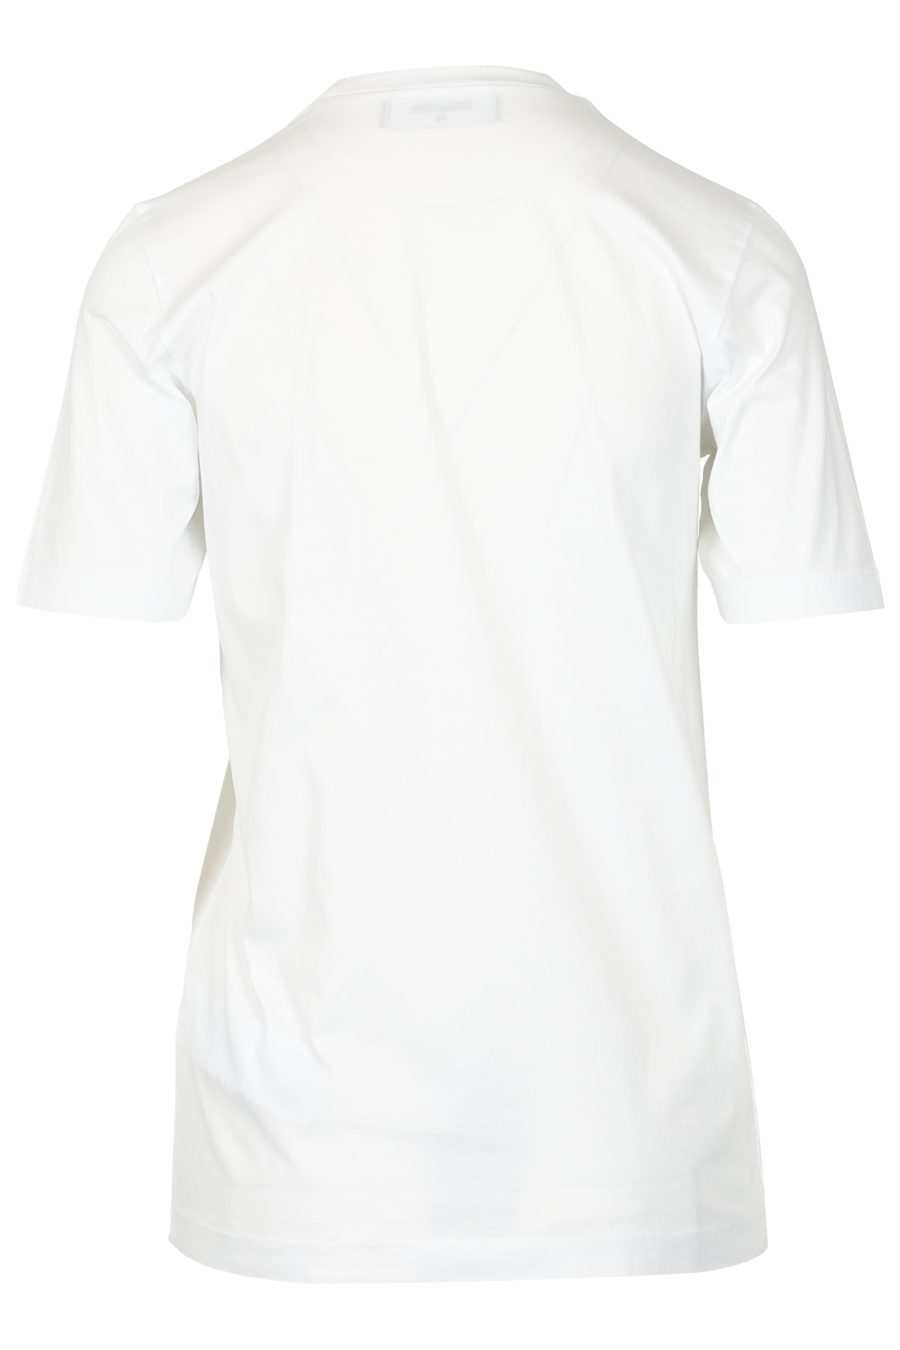 T-shirt blanc à manches courtes "Ceresio Milano" - IMG 3273